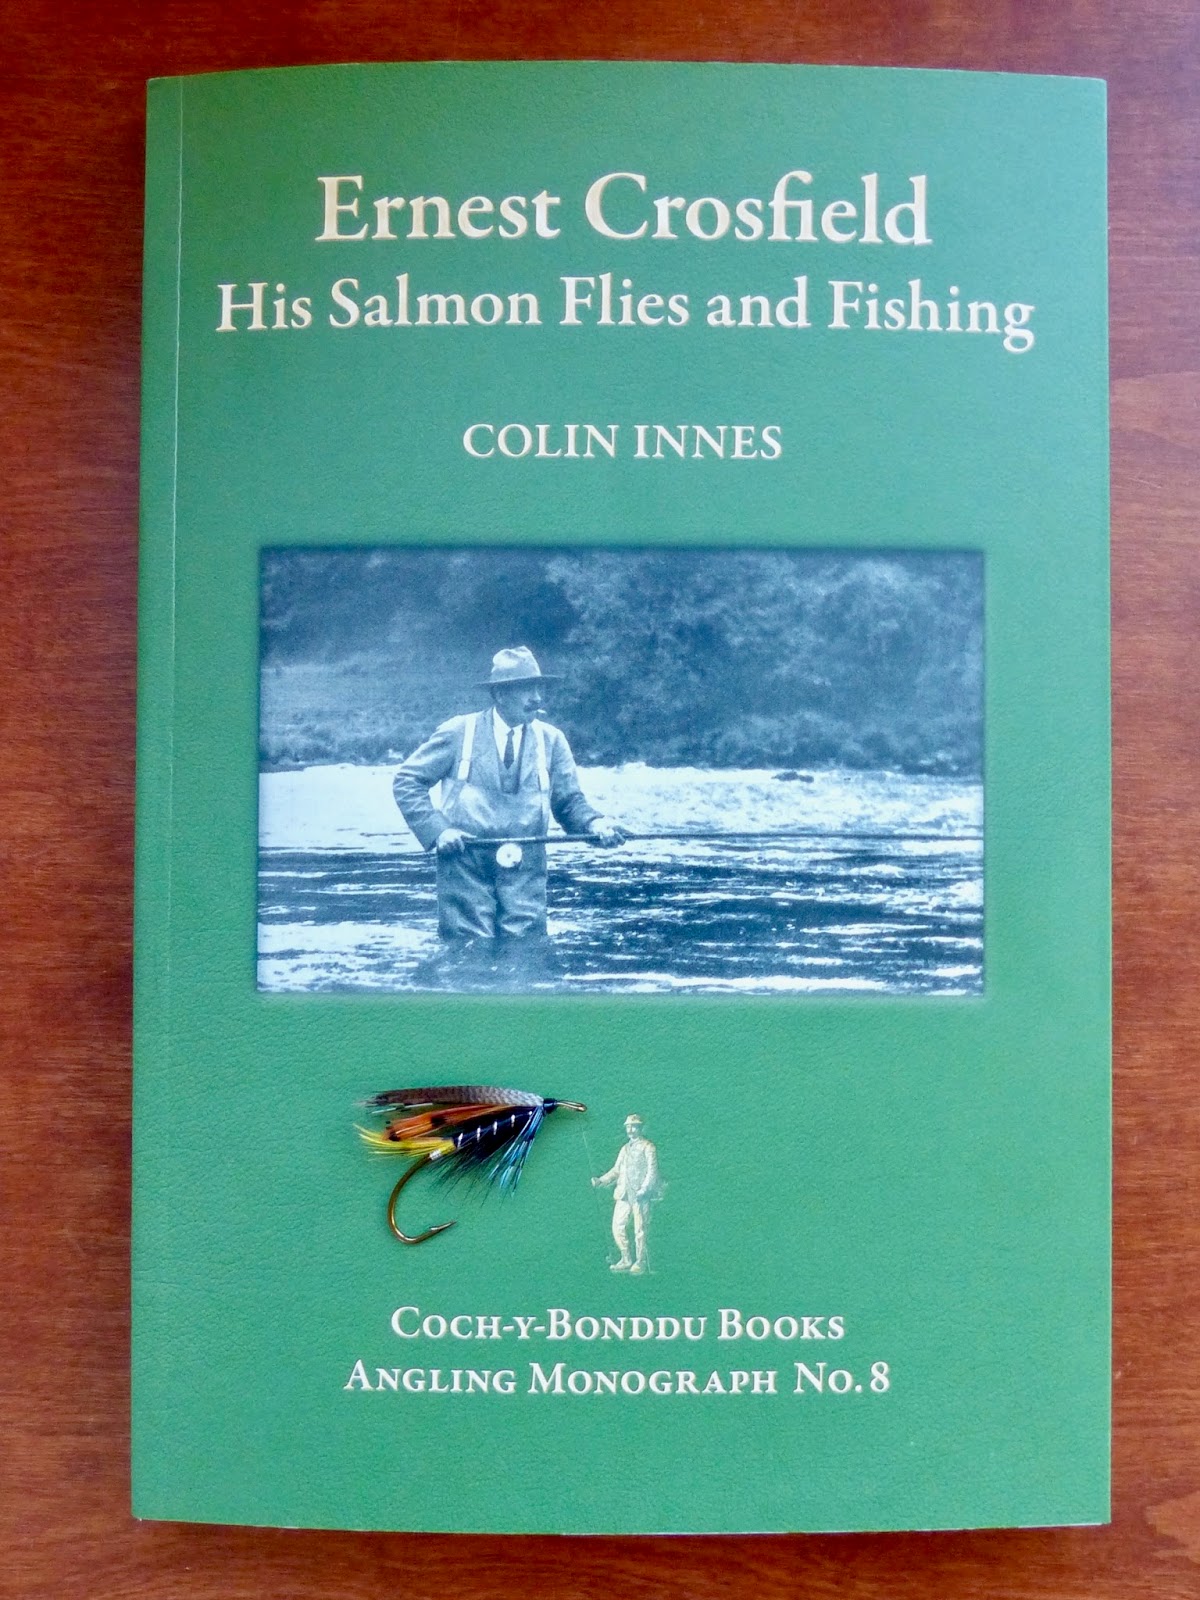 Atlantic Salmon Flies: Ernest Crosfield: His Salmon Flies and